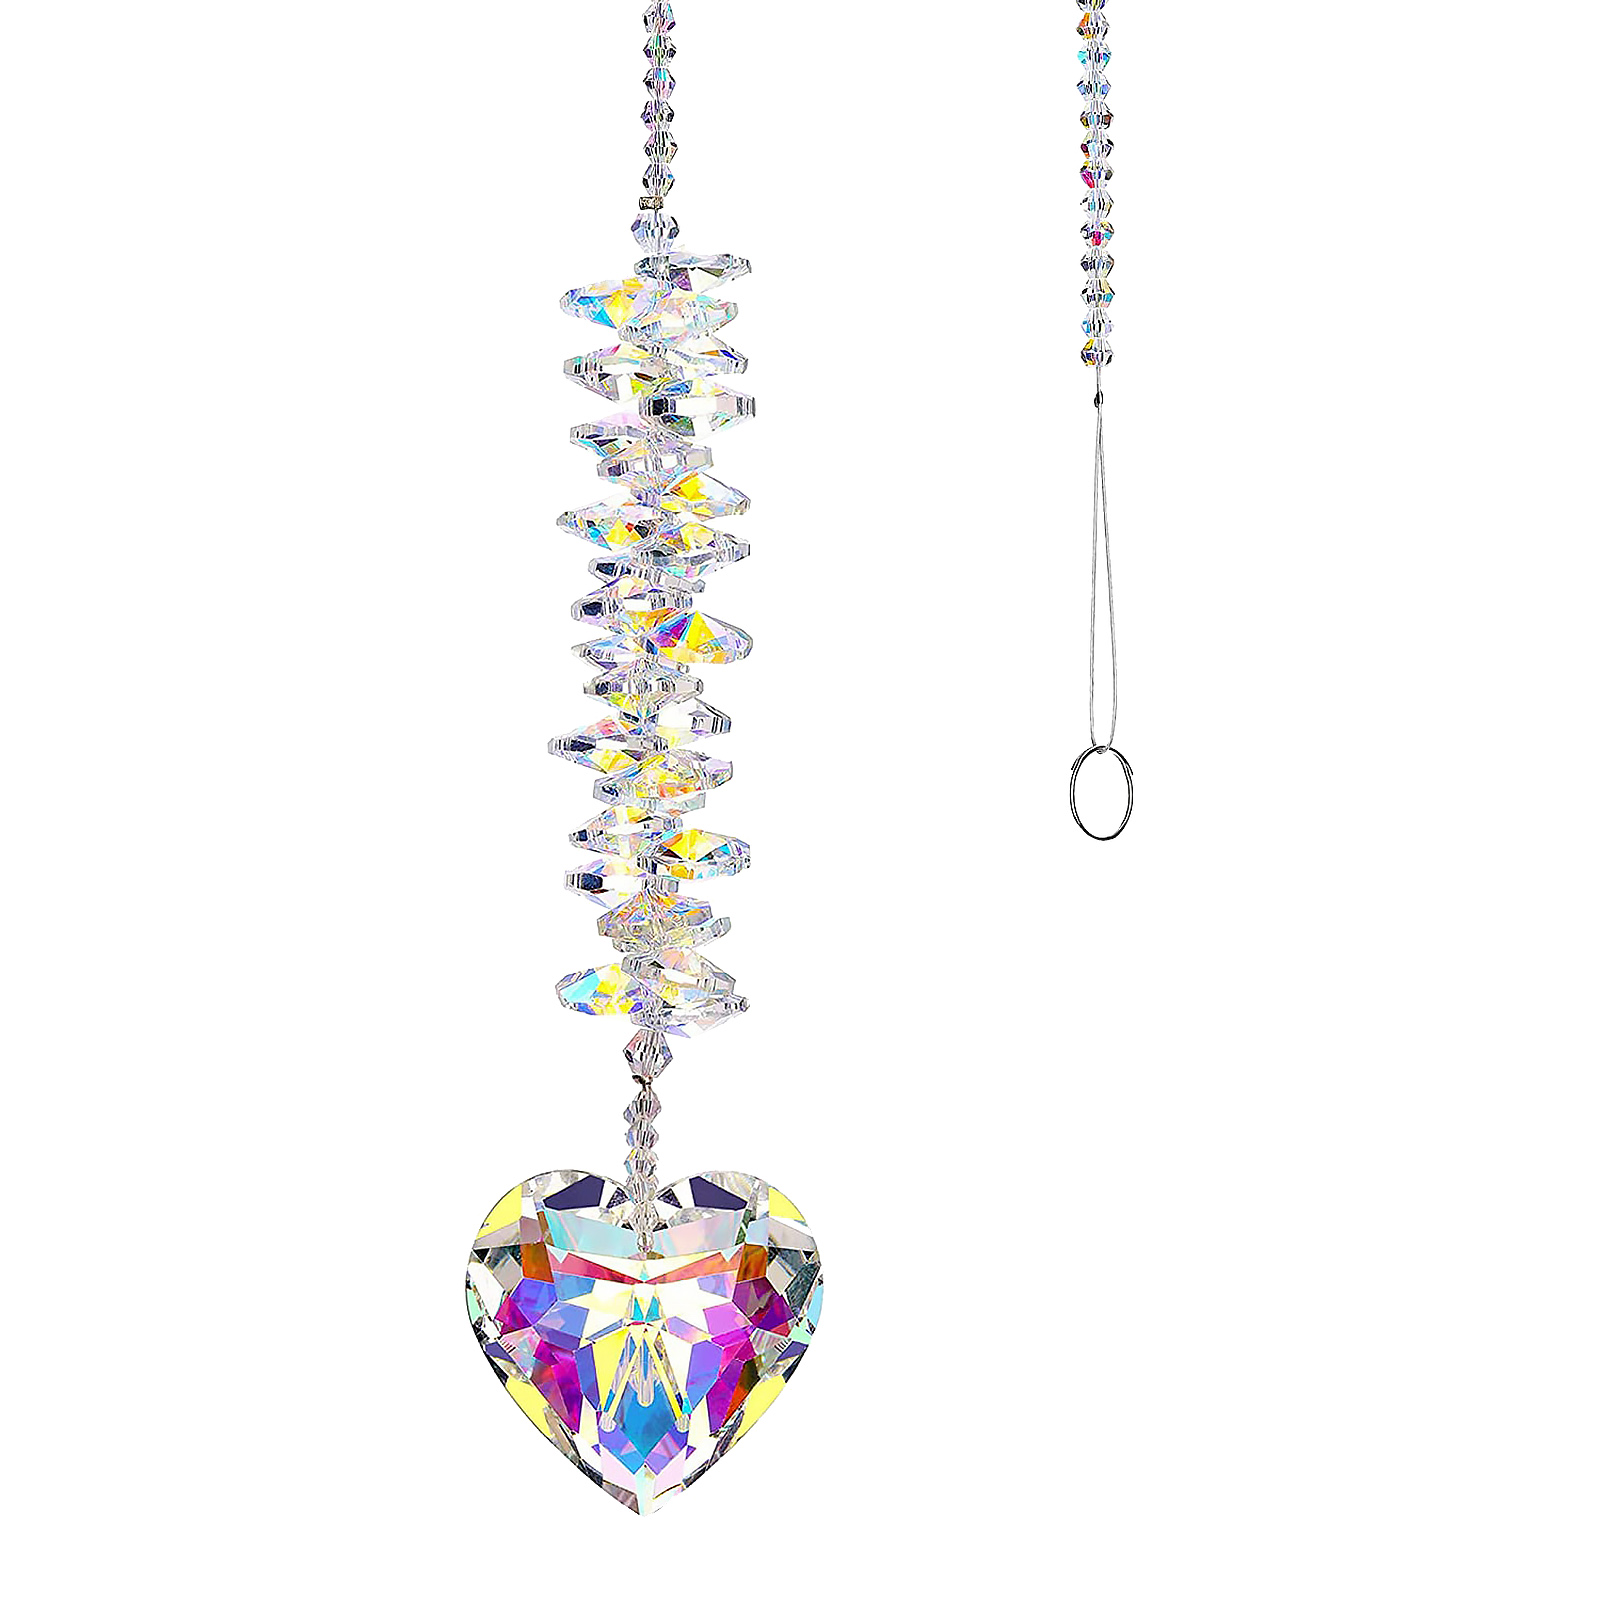 Crystal Love Light Catcher- Hanging Chandelier Pendant Valentines Day Gift